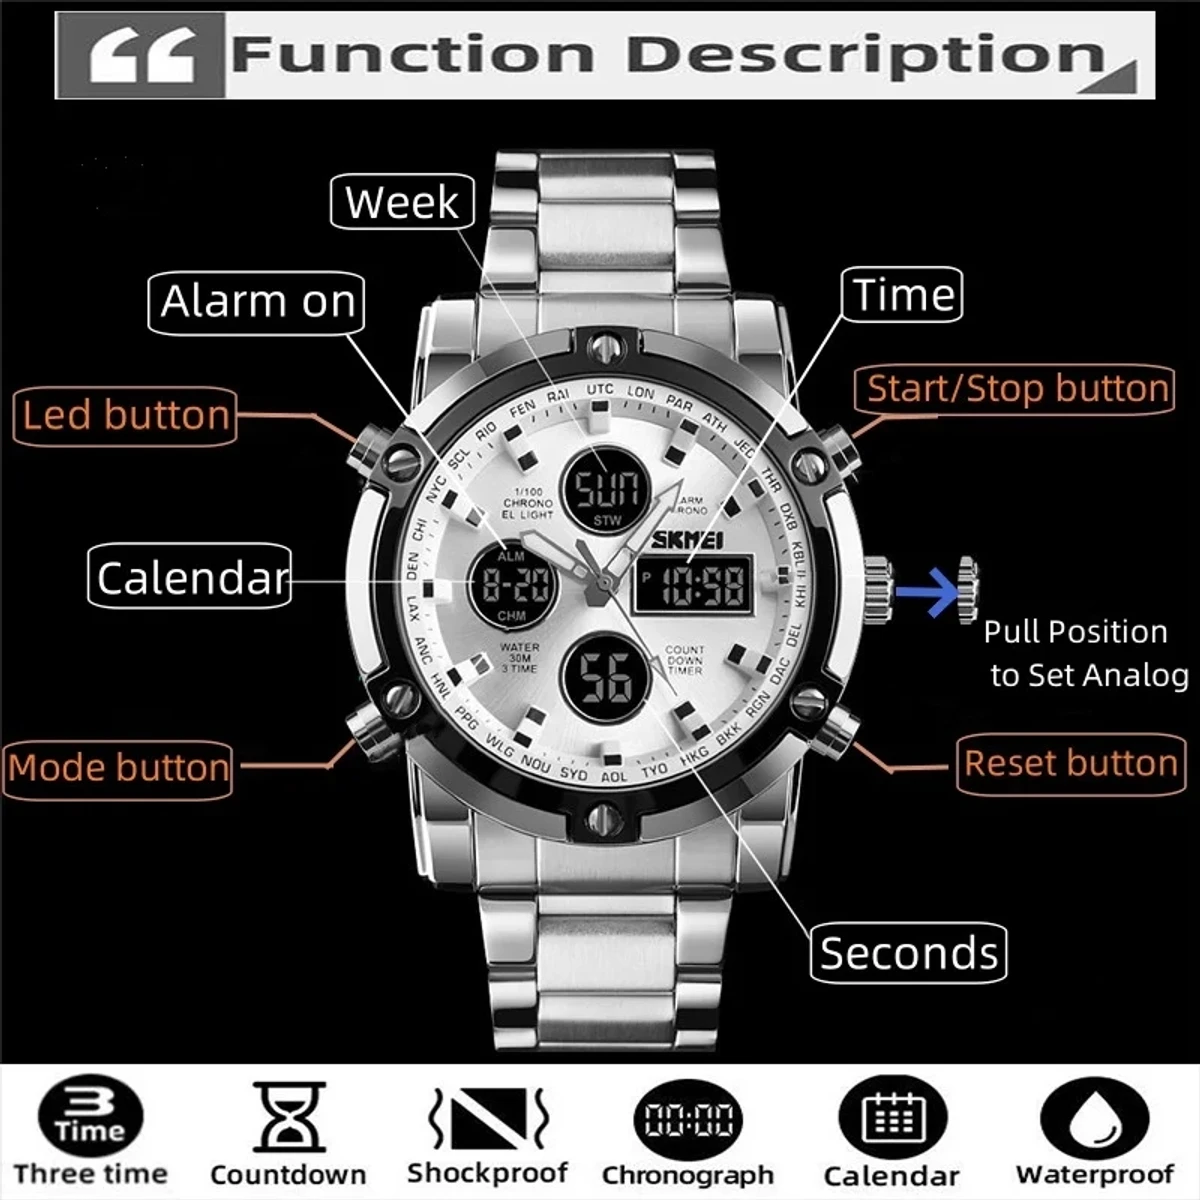 SKMEI 1389 Watch 2 Times, Chronograph, Alarm, Date, Week, LED Light, 12/24 Hour Clock, Countdown